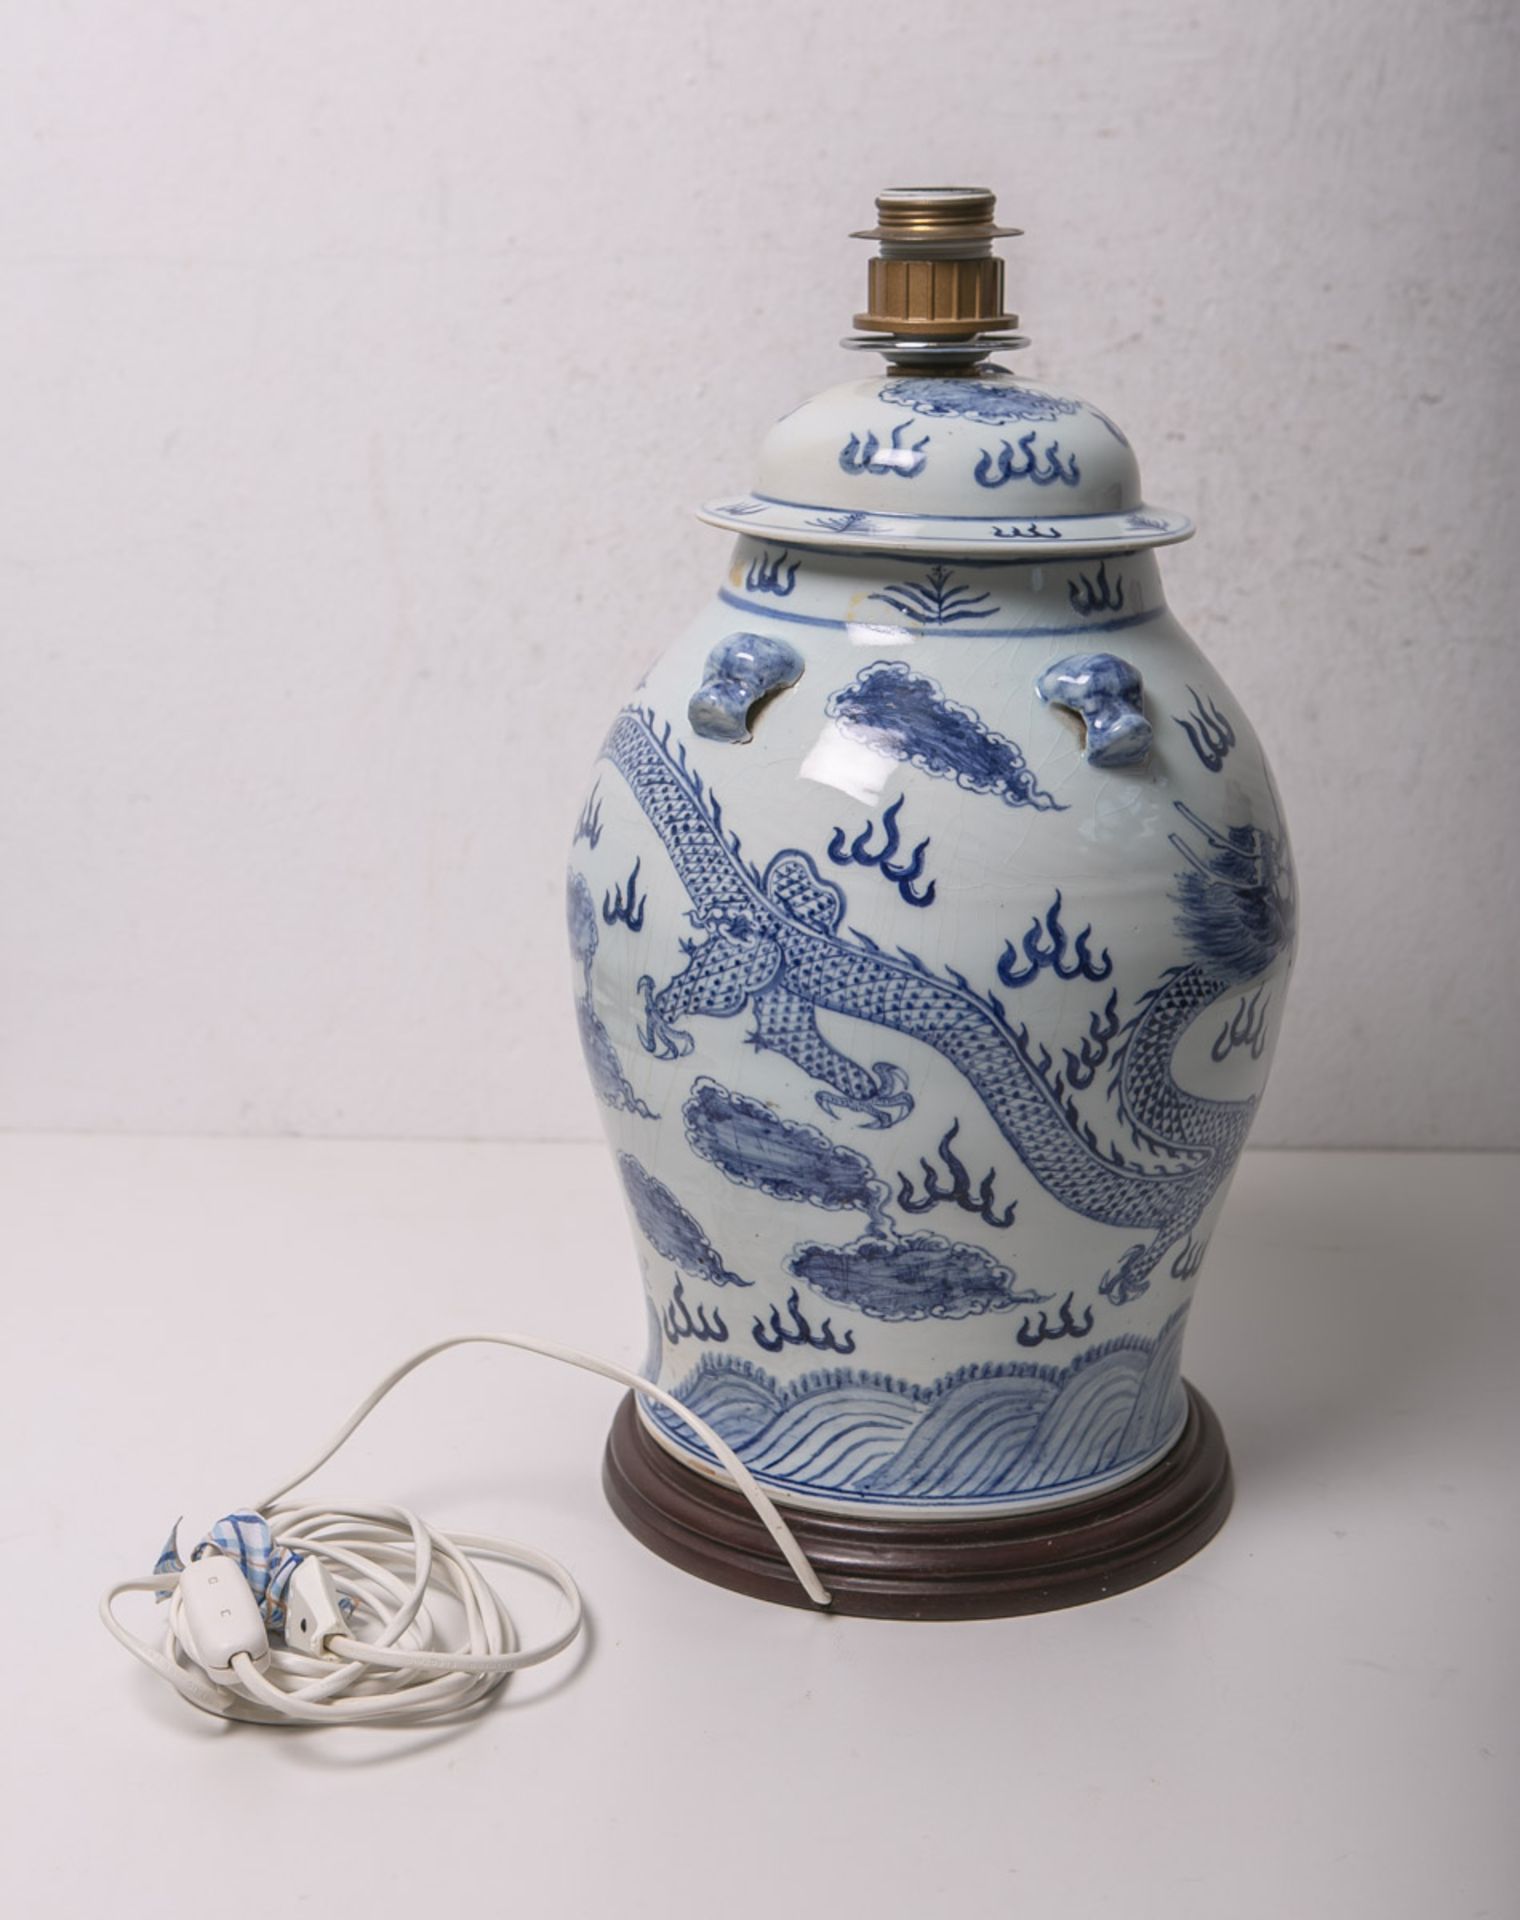 Zur Lampe umgebaute Vase (China, wohl 17./18. Jh.)